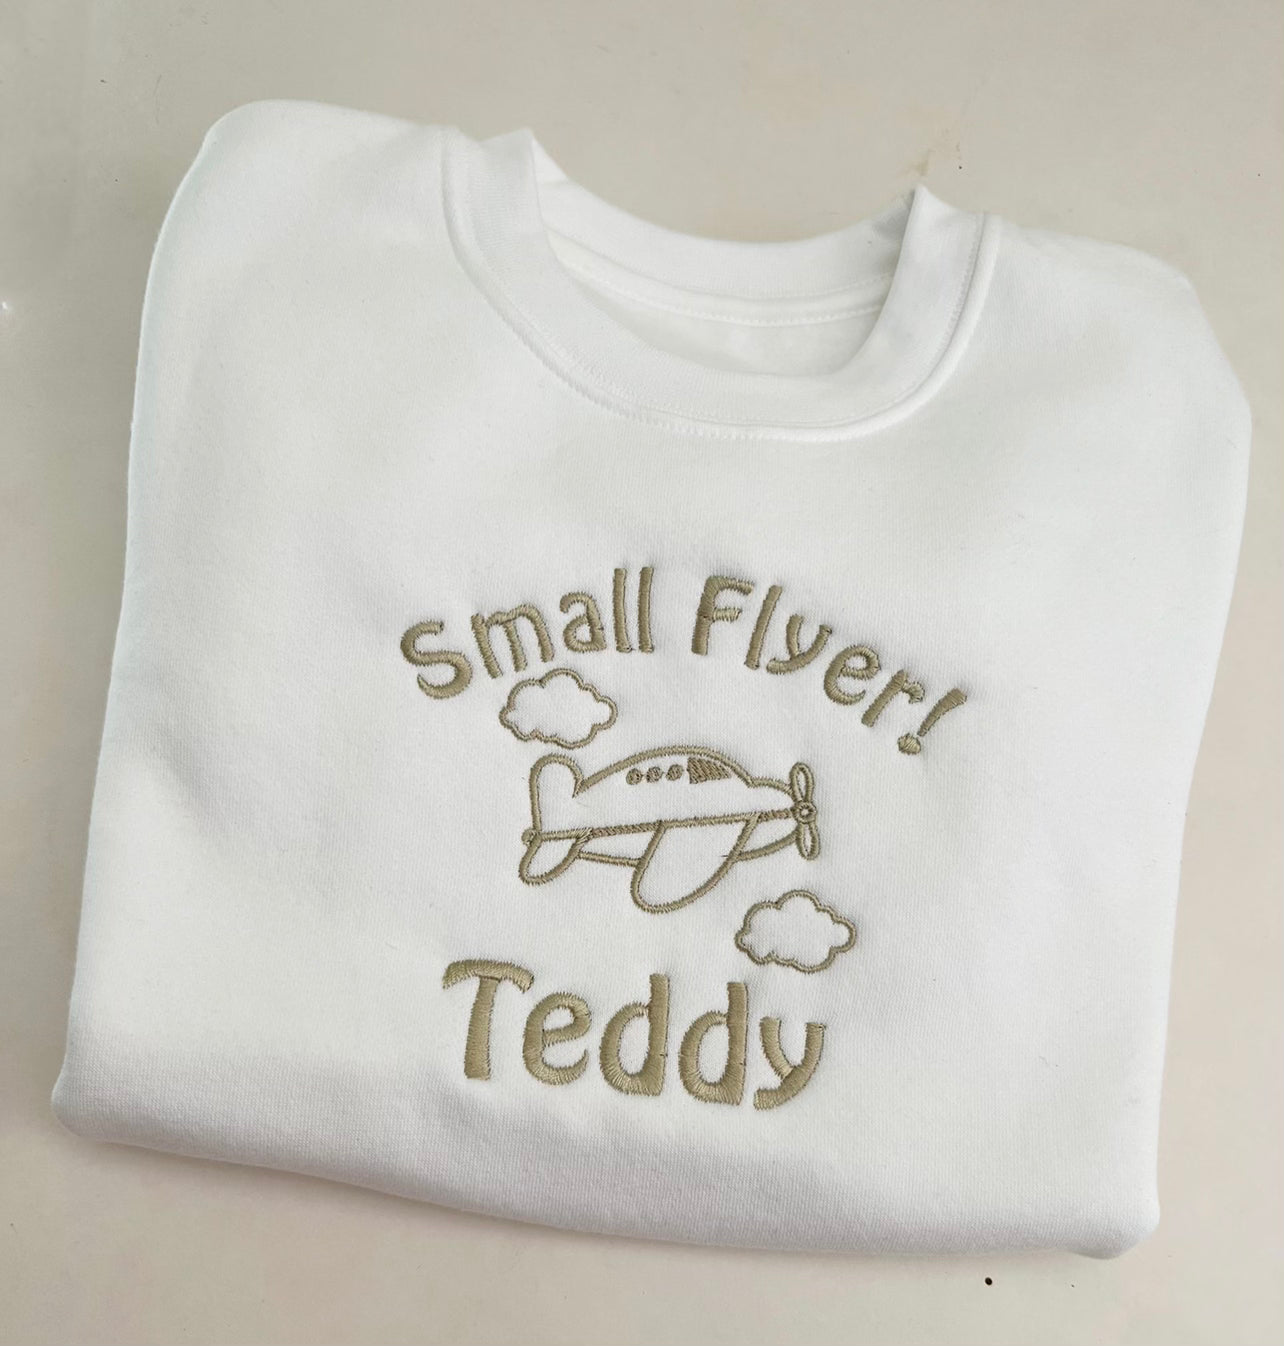 Mini/Small Flyer Sweatshirt